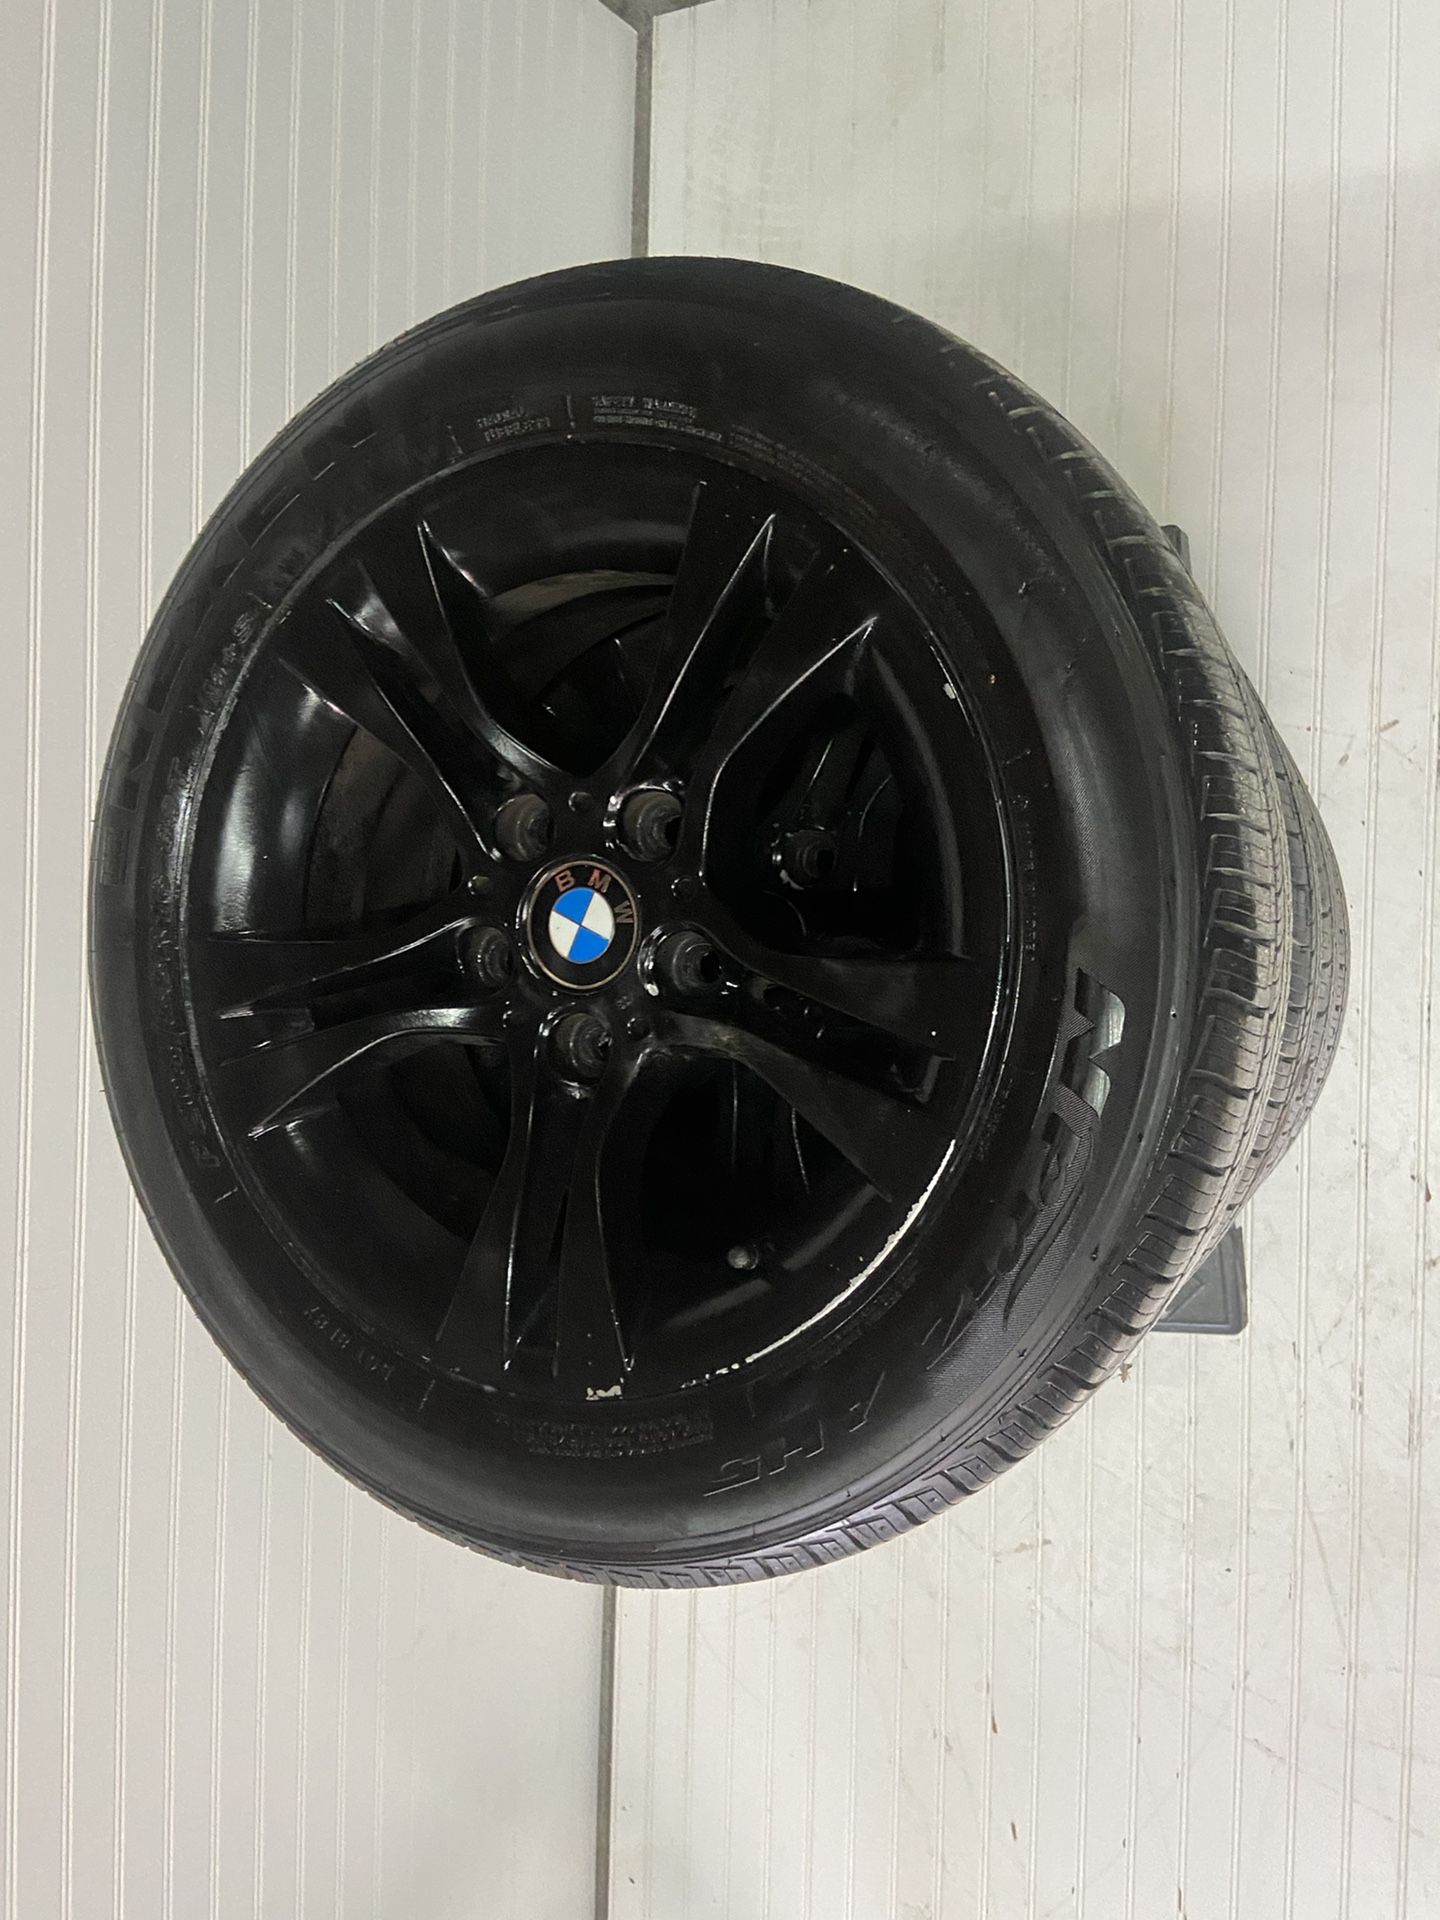 BMW 328i 3-Series E90 Black Wheels Rims And New Tires